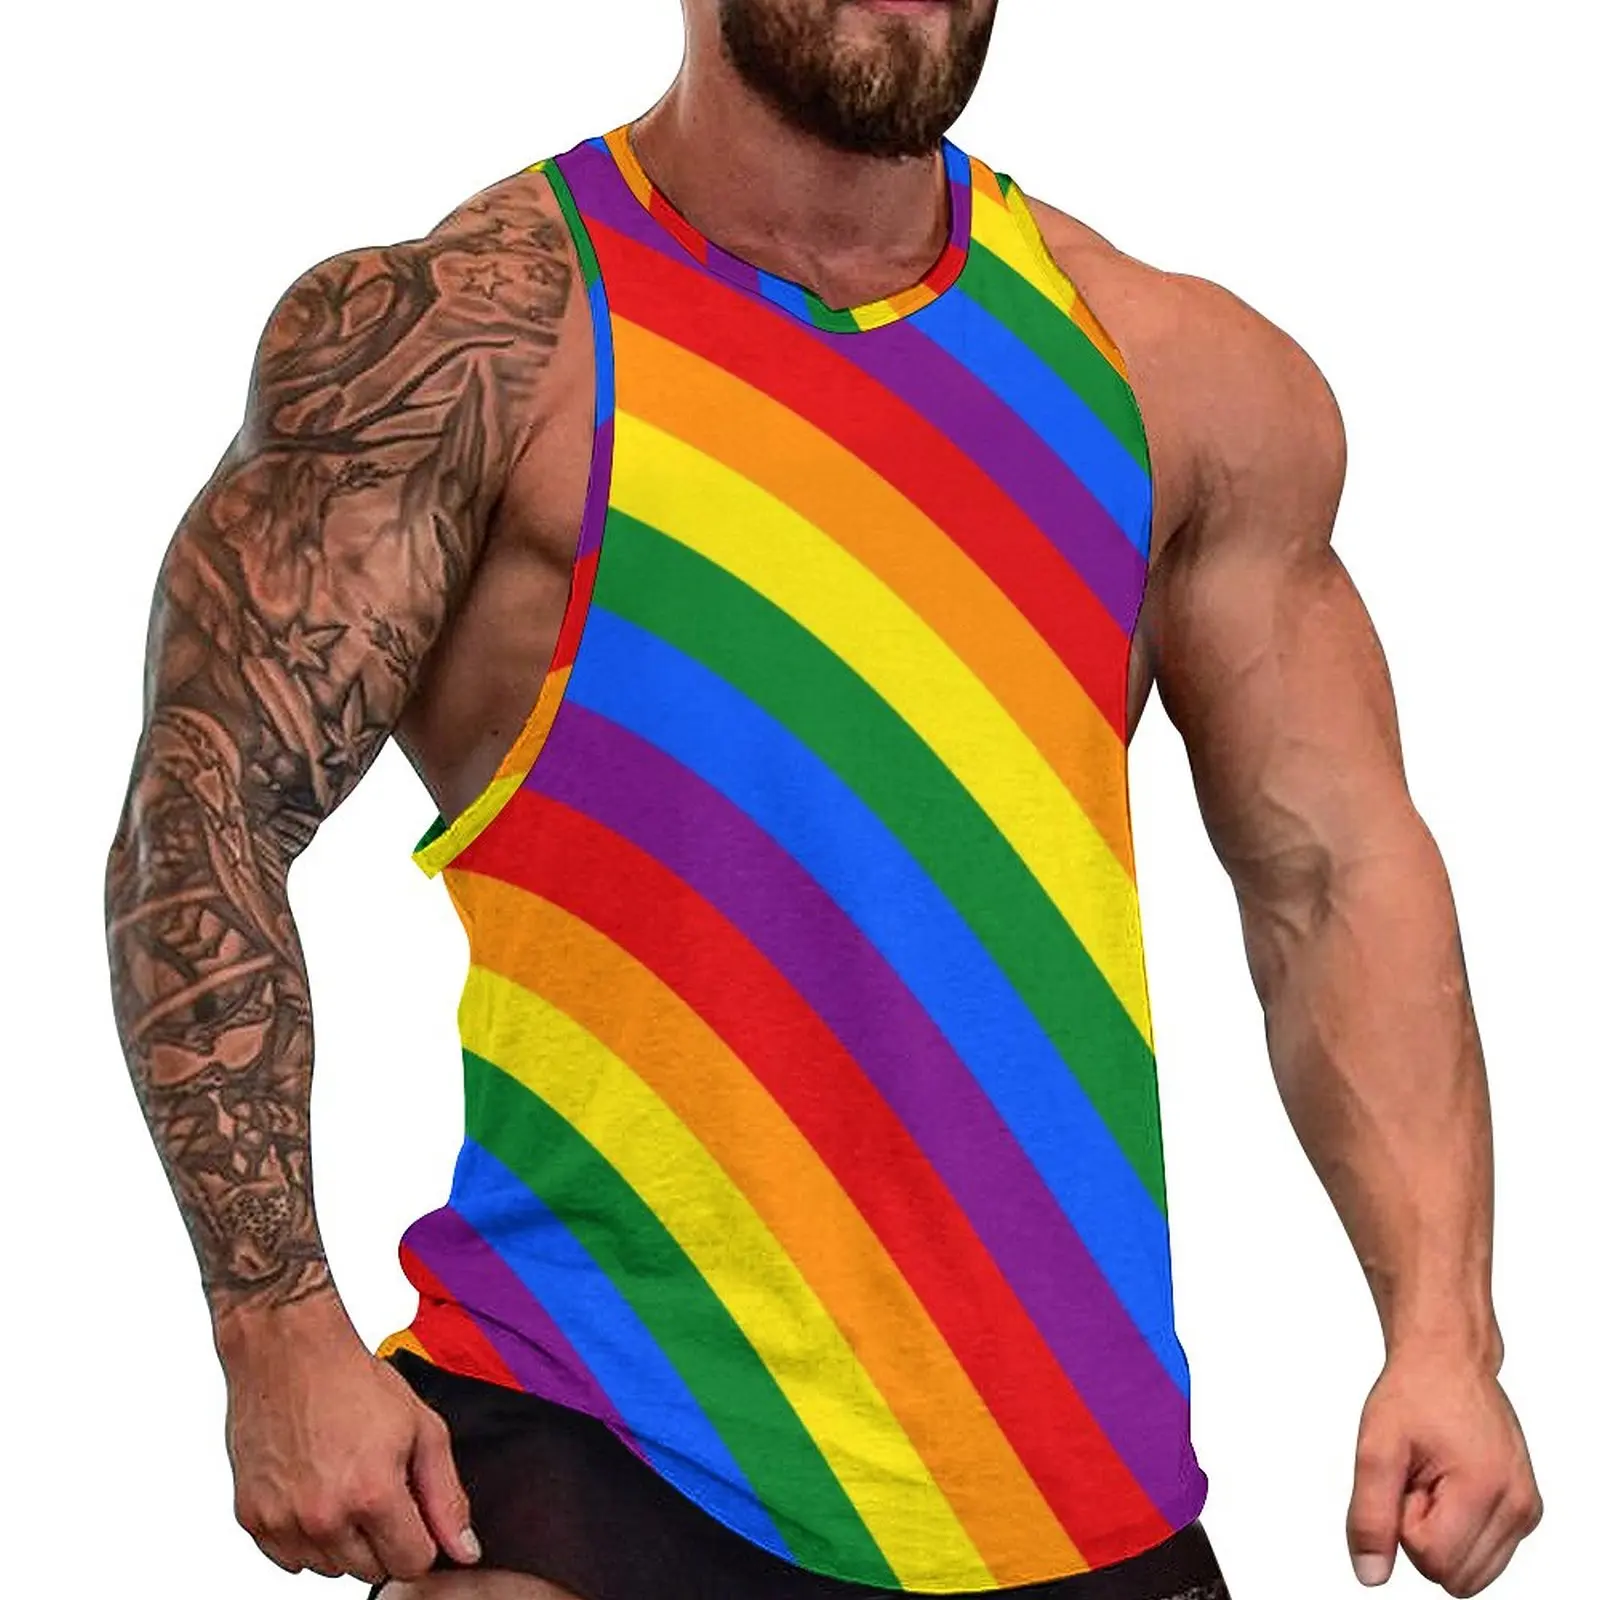 

LGBT Rainbow Tank Top Male Gay Pride Flag Cool Tops Summer Gym Pattern Sleeveless Vests 3XL 4XL 5XL